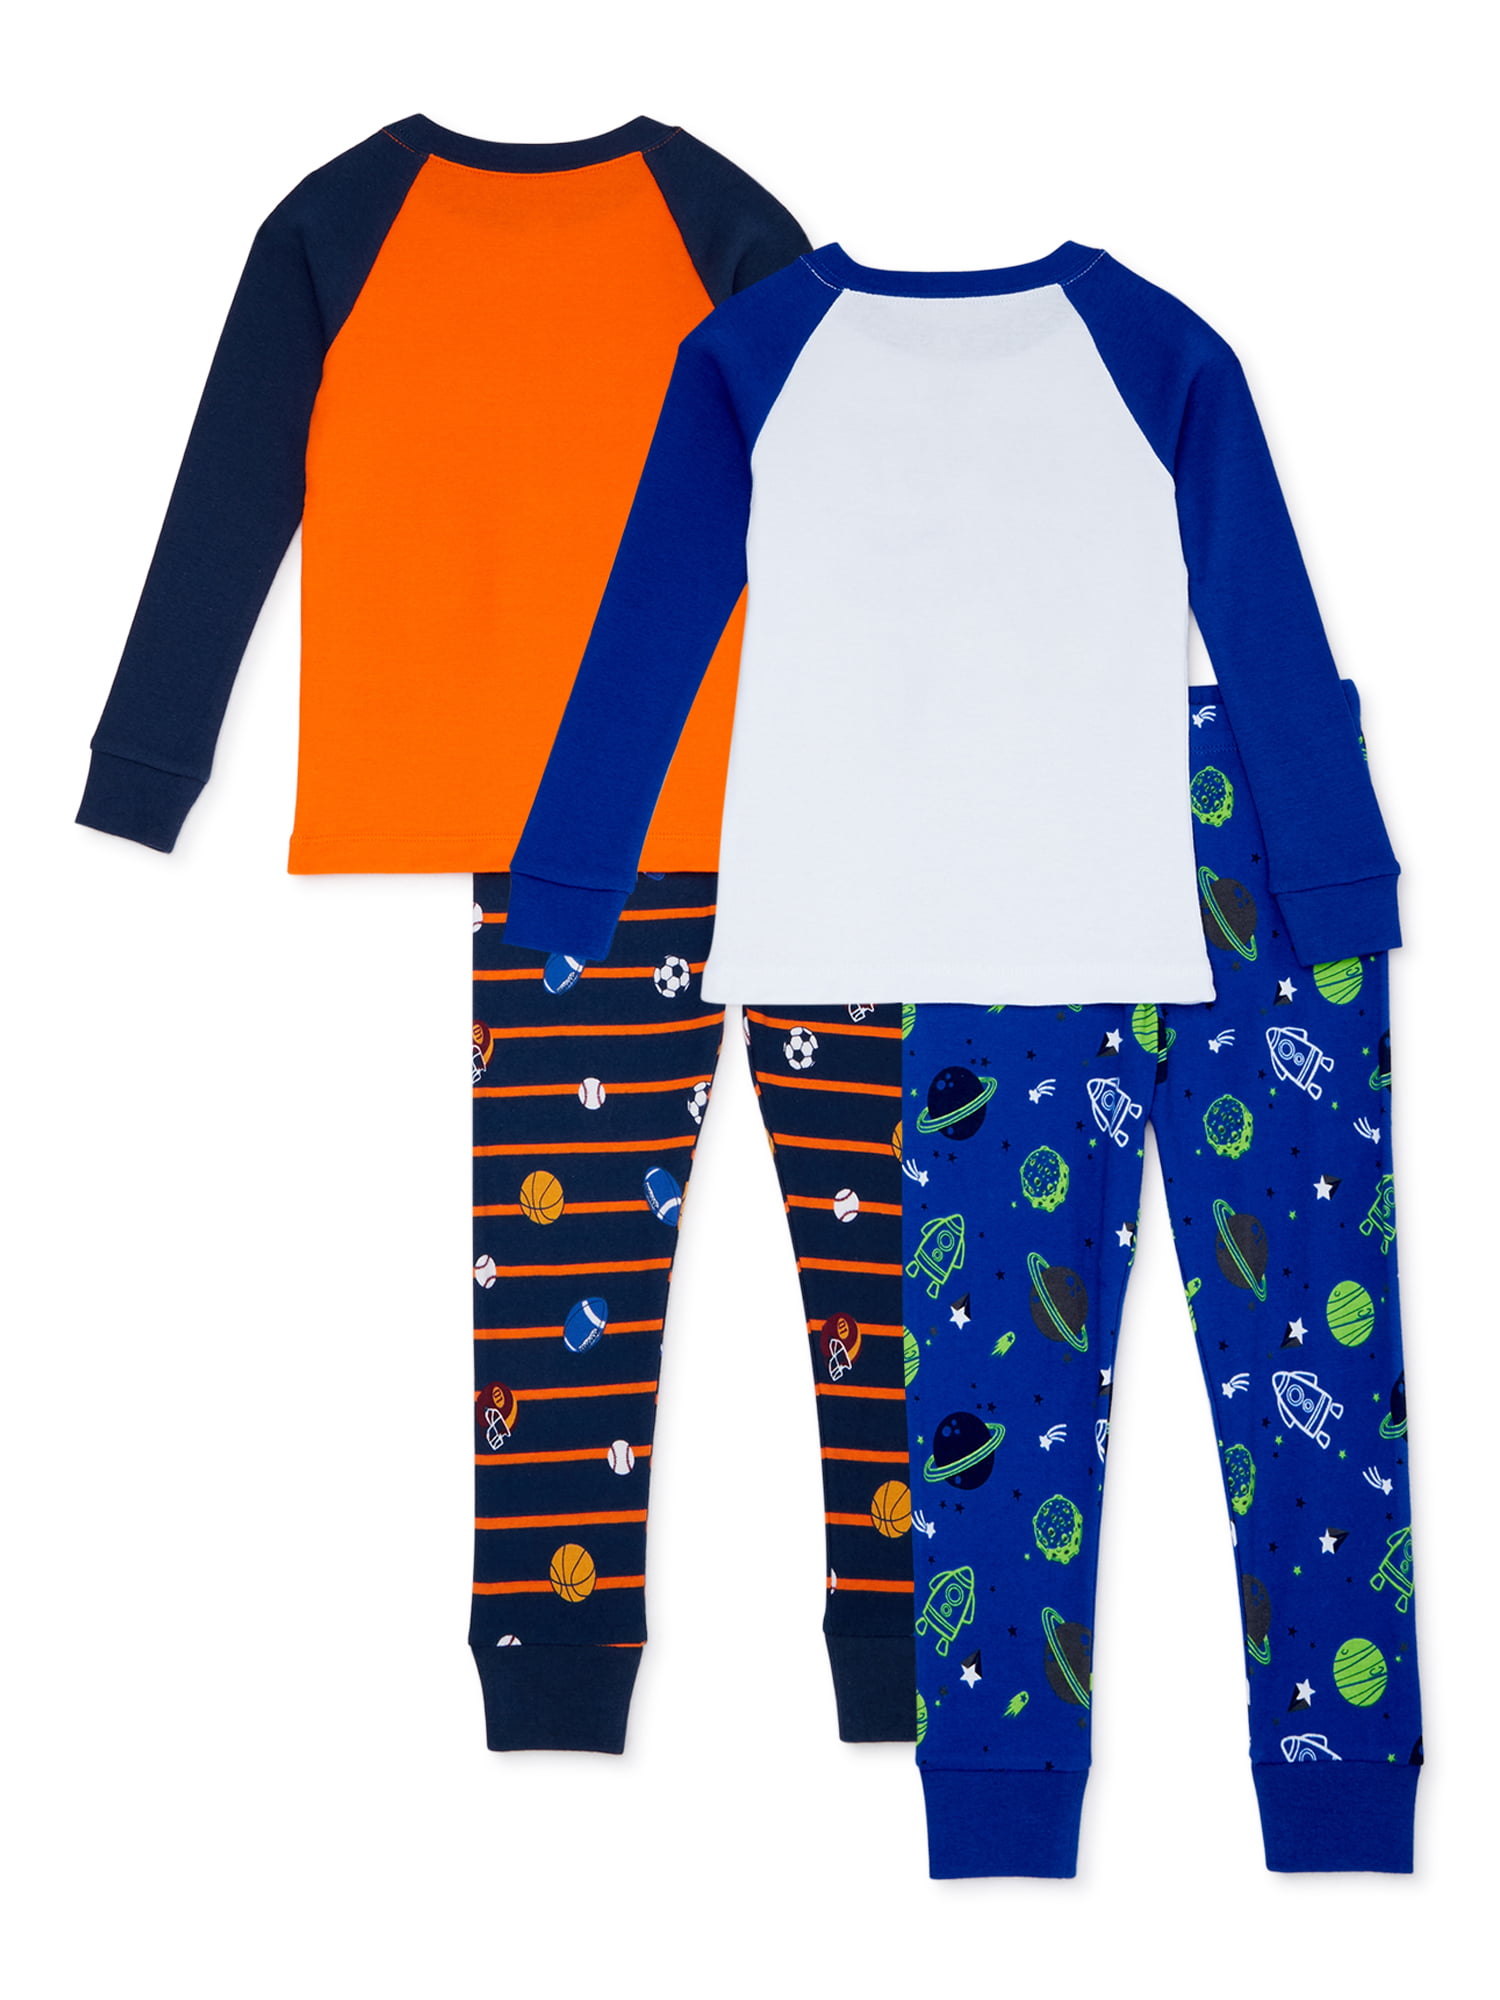 5 Years Boys Baby Toddler Joey JCB Long Sleeve Pyjamas pjs Age 18 months 